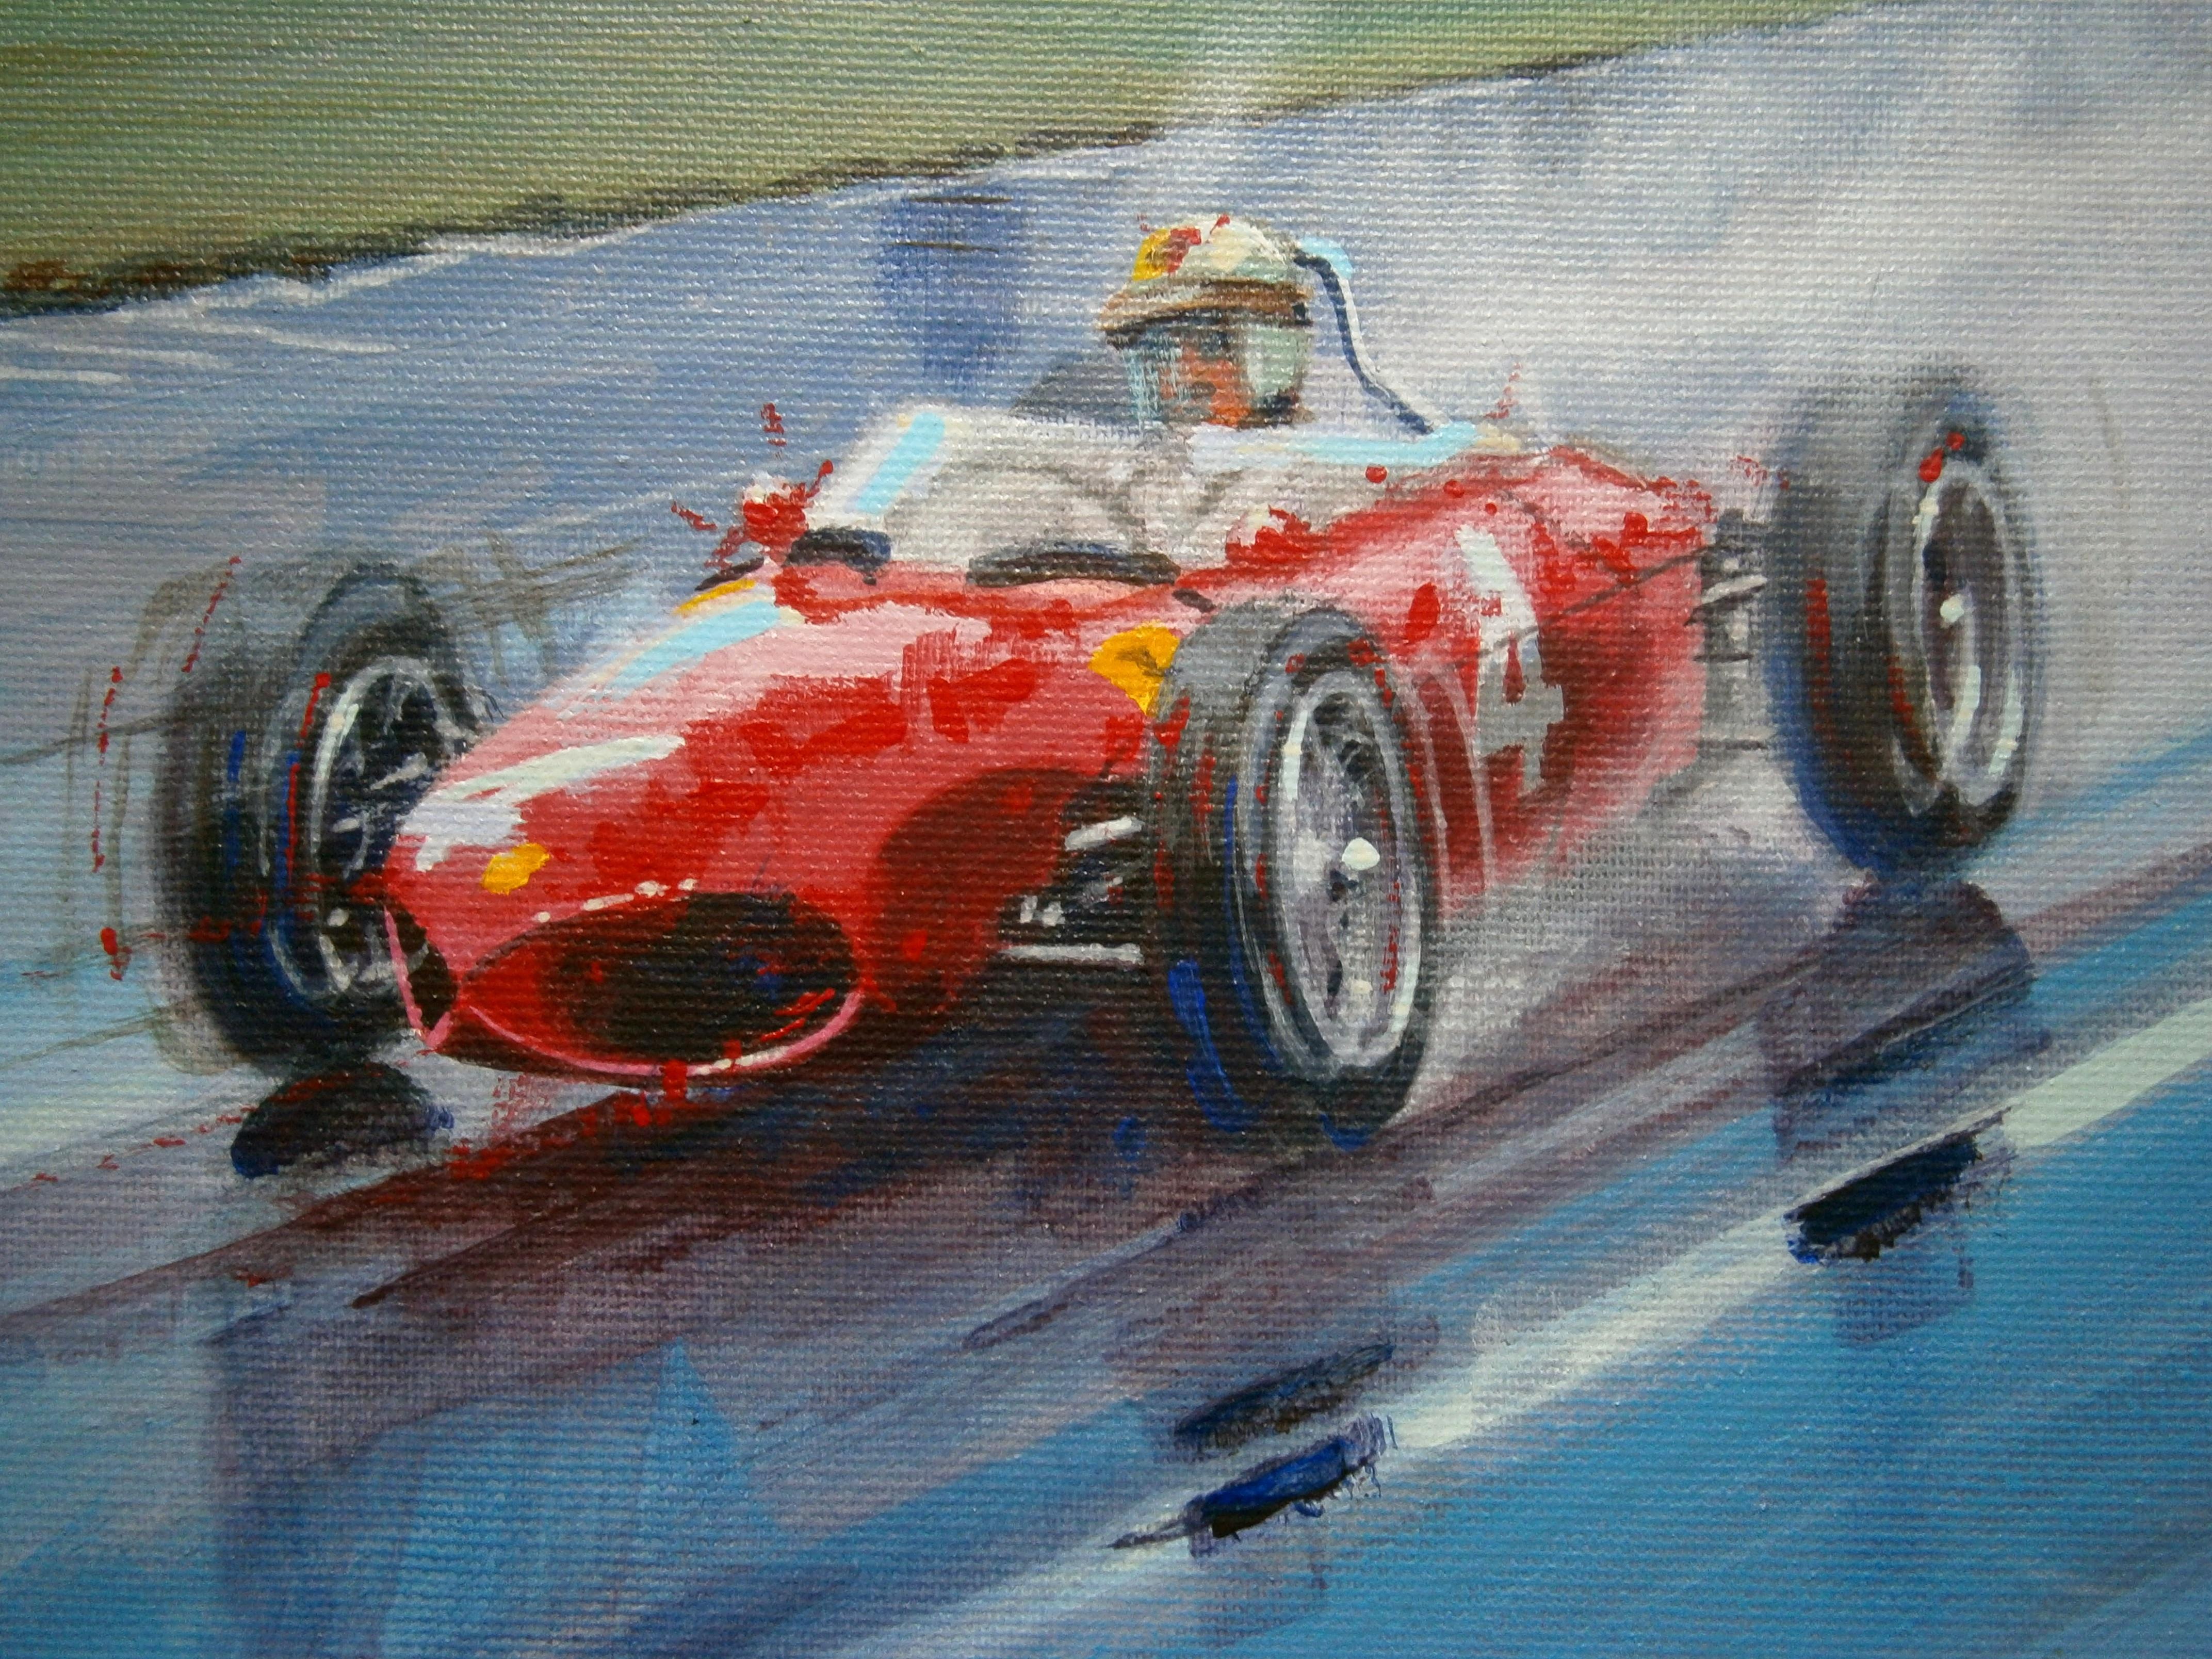 Balaguer  Races Wolfgang von Trips (Ferrari 156 F1) et Stirling Moss  - Contemporain Painting par Alex BALAGUER